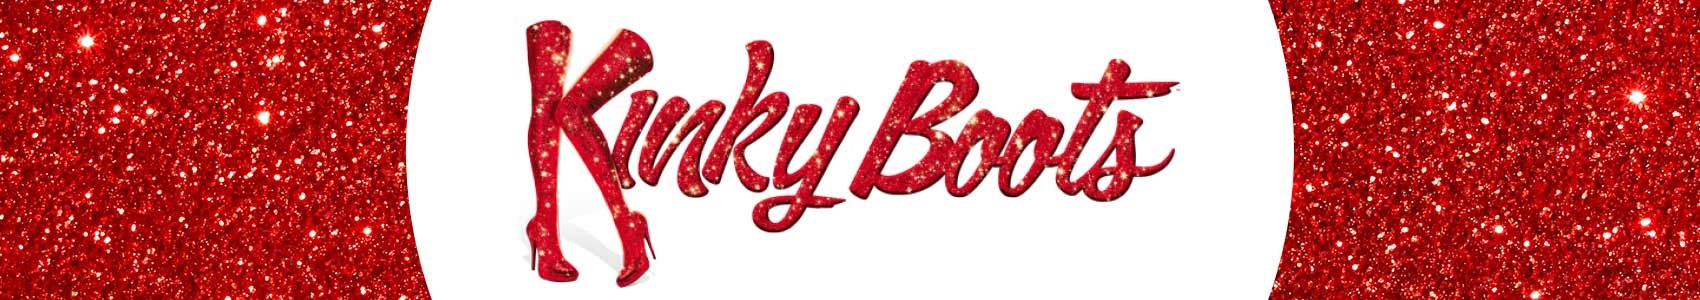 Kinky Boots - The Musical - NZ Premiere Season 